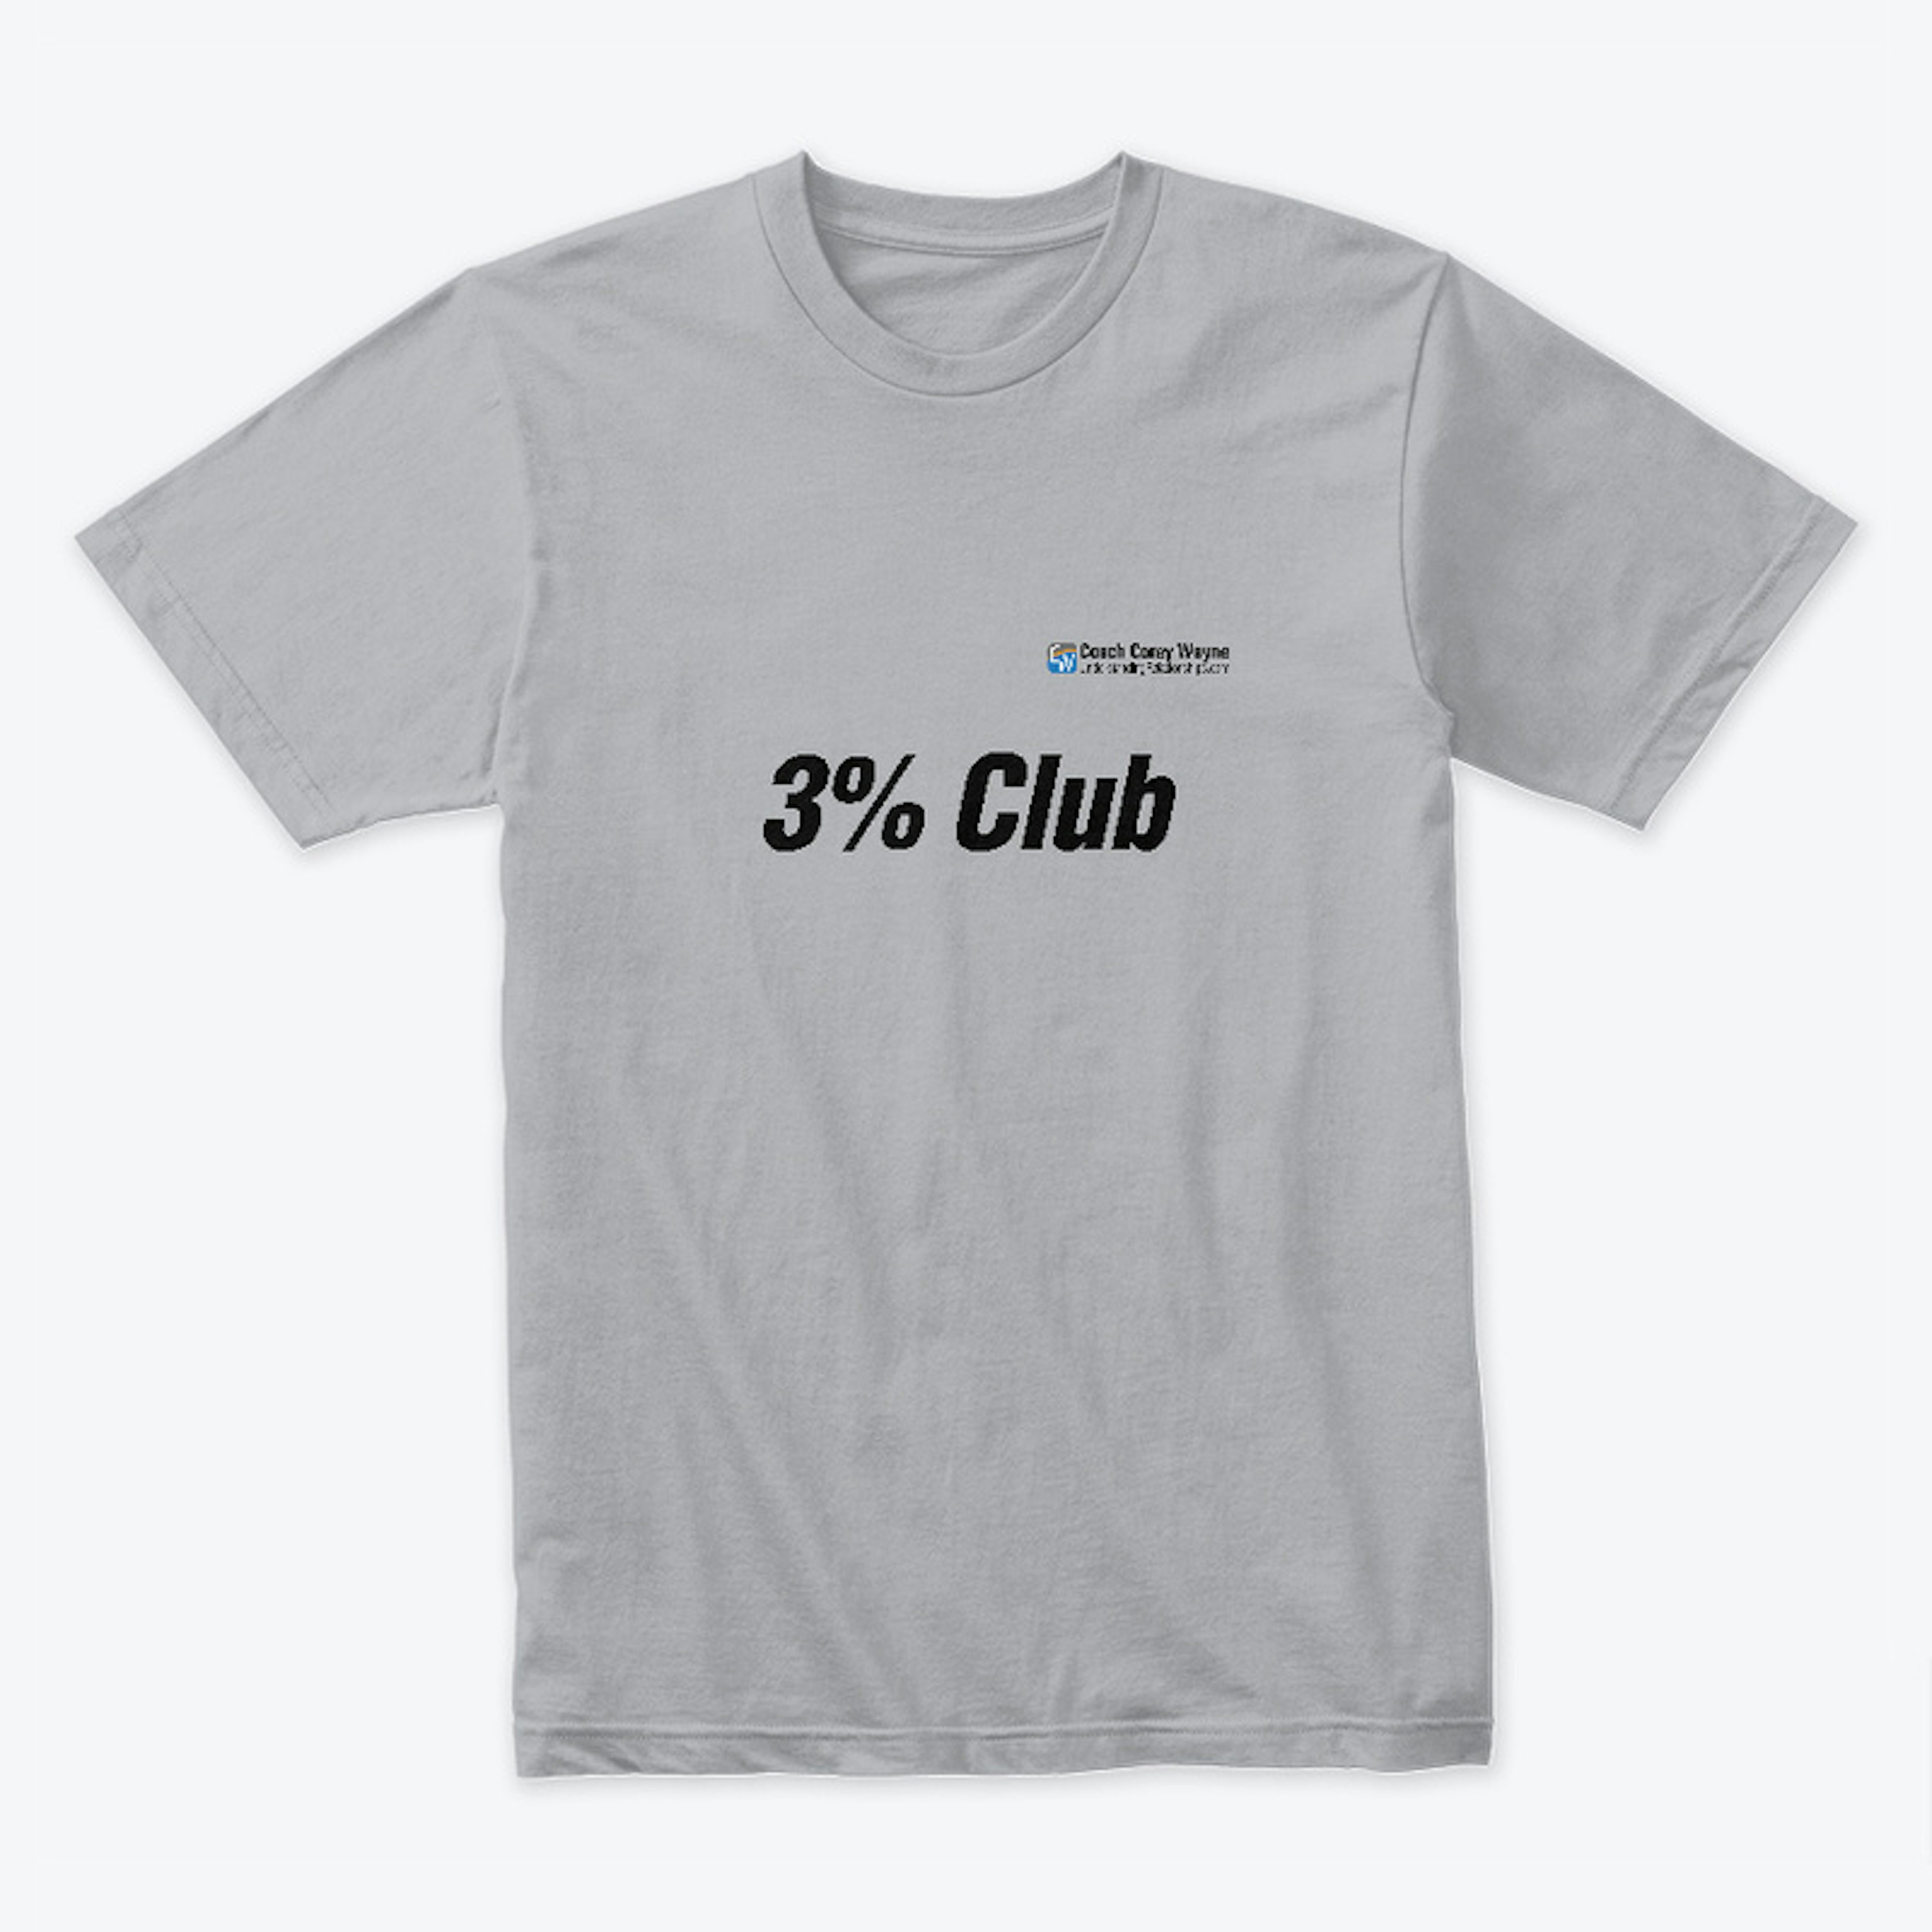 "3% Club" Text Logo Tee